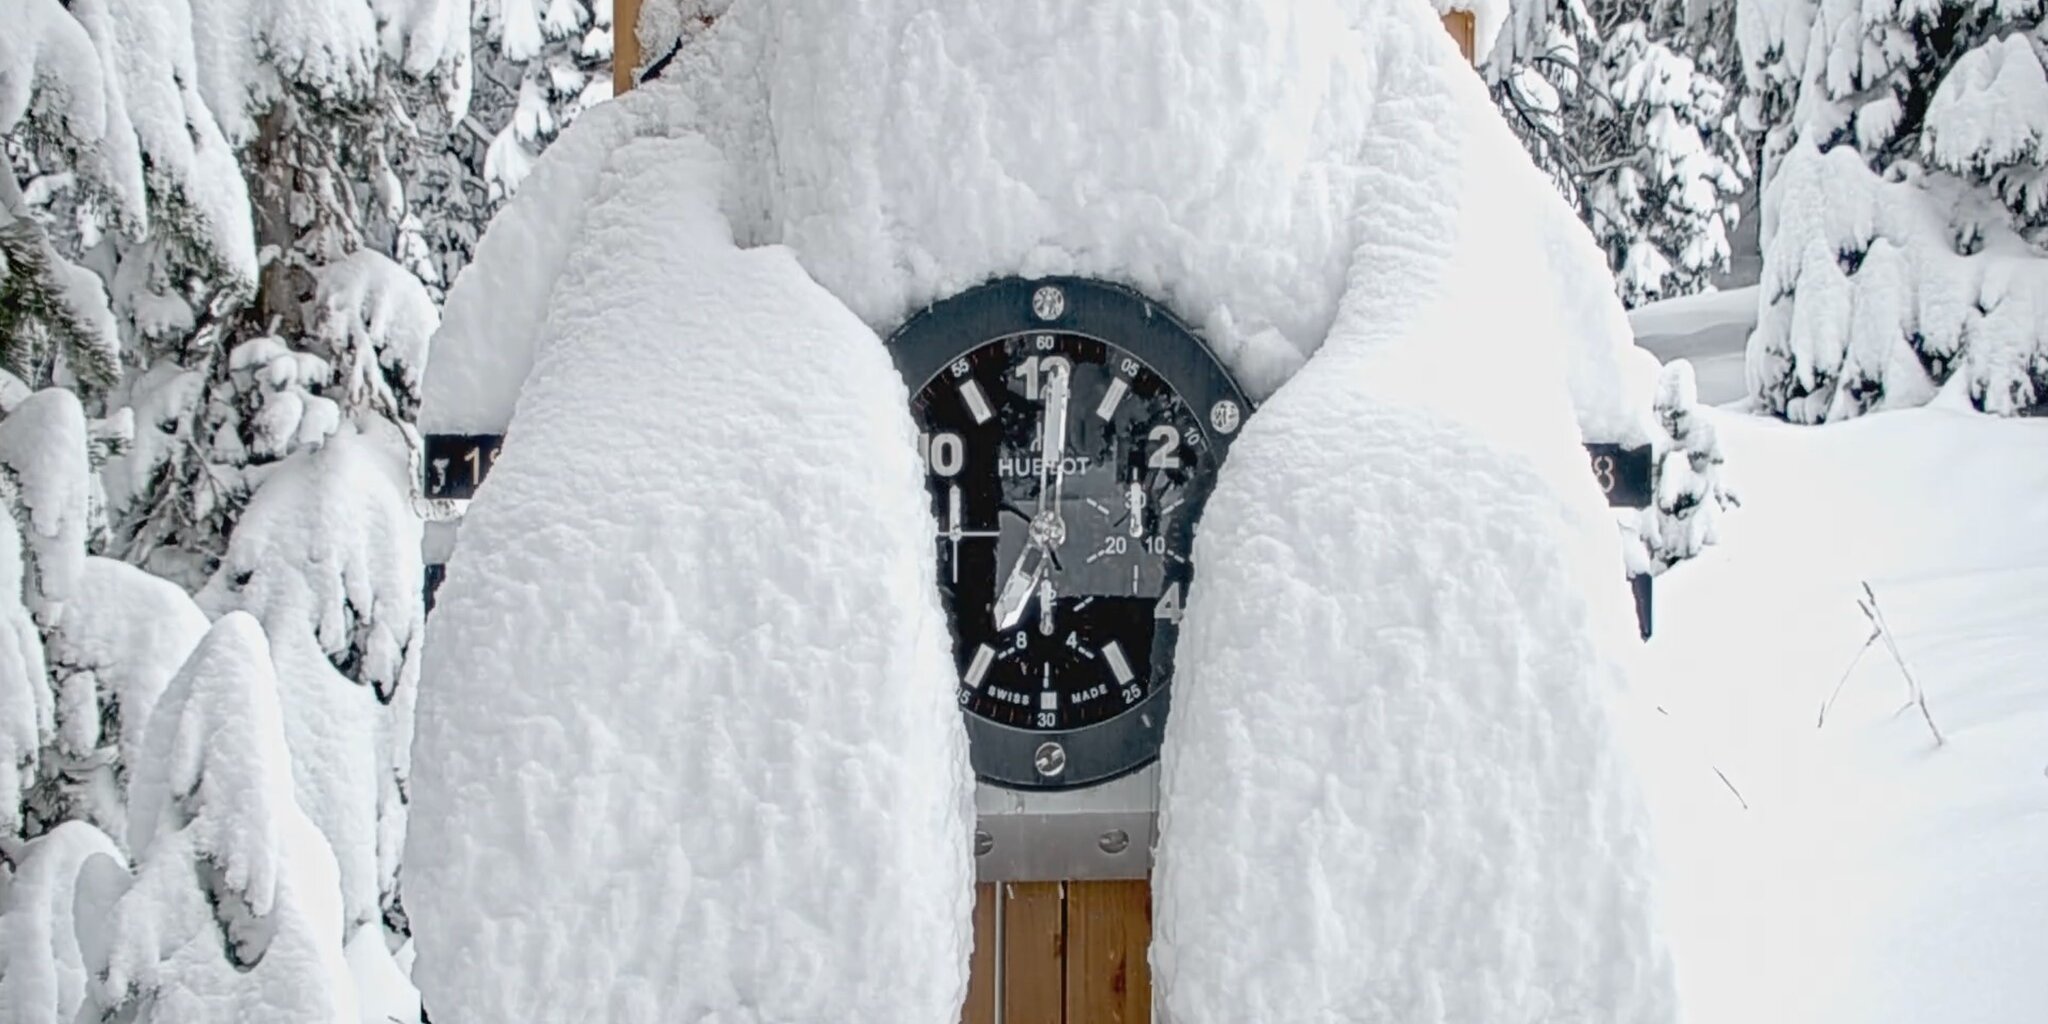 Aspen Snowmass: 24 óra alatt ennyi hullott